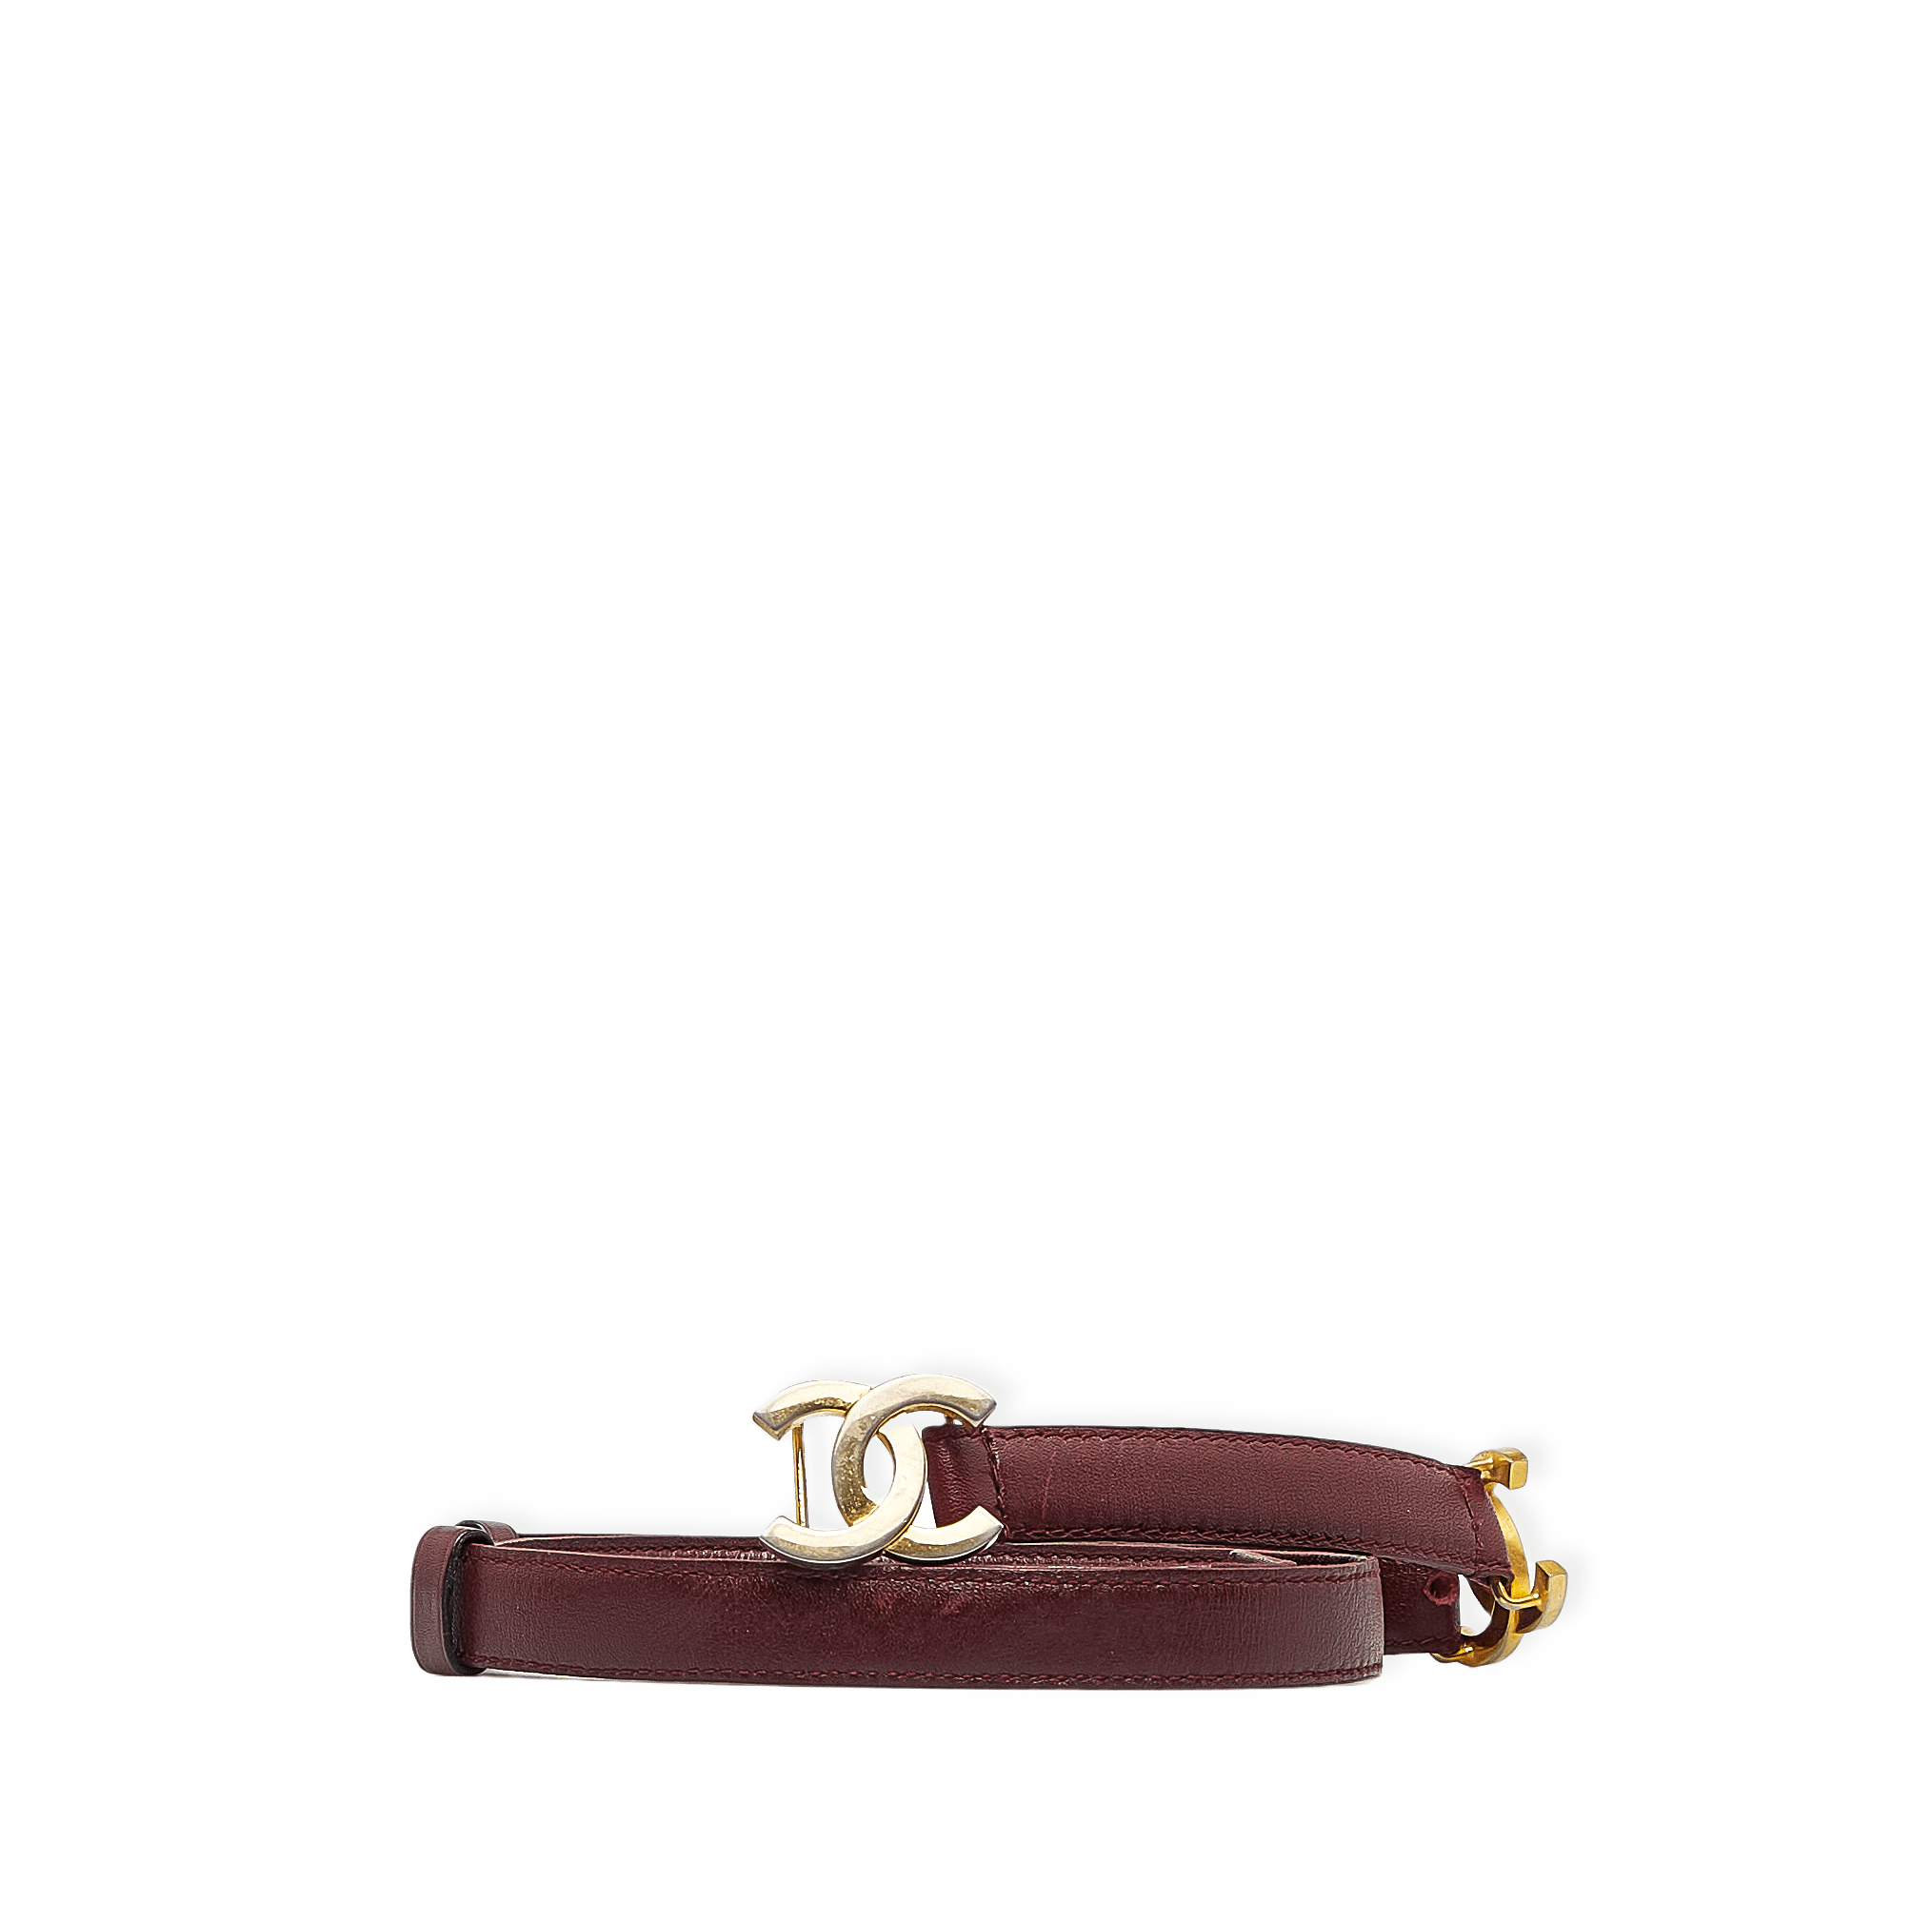 Chanel Cc Leather Belt från Luxclusif